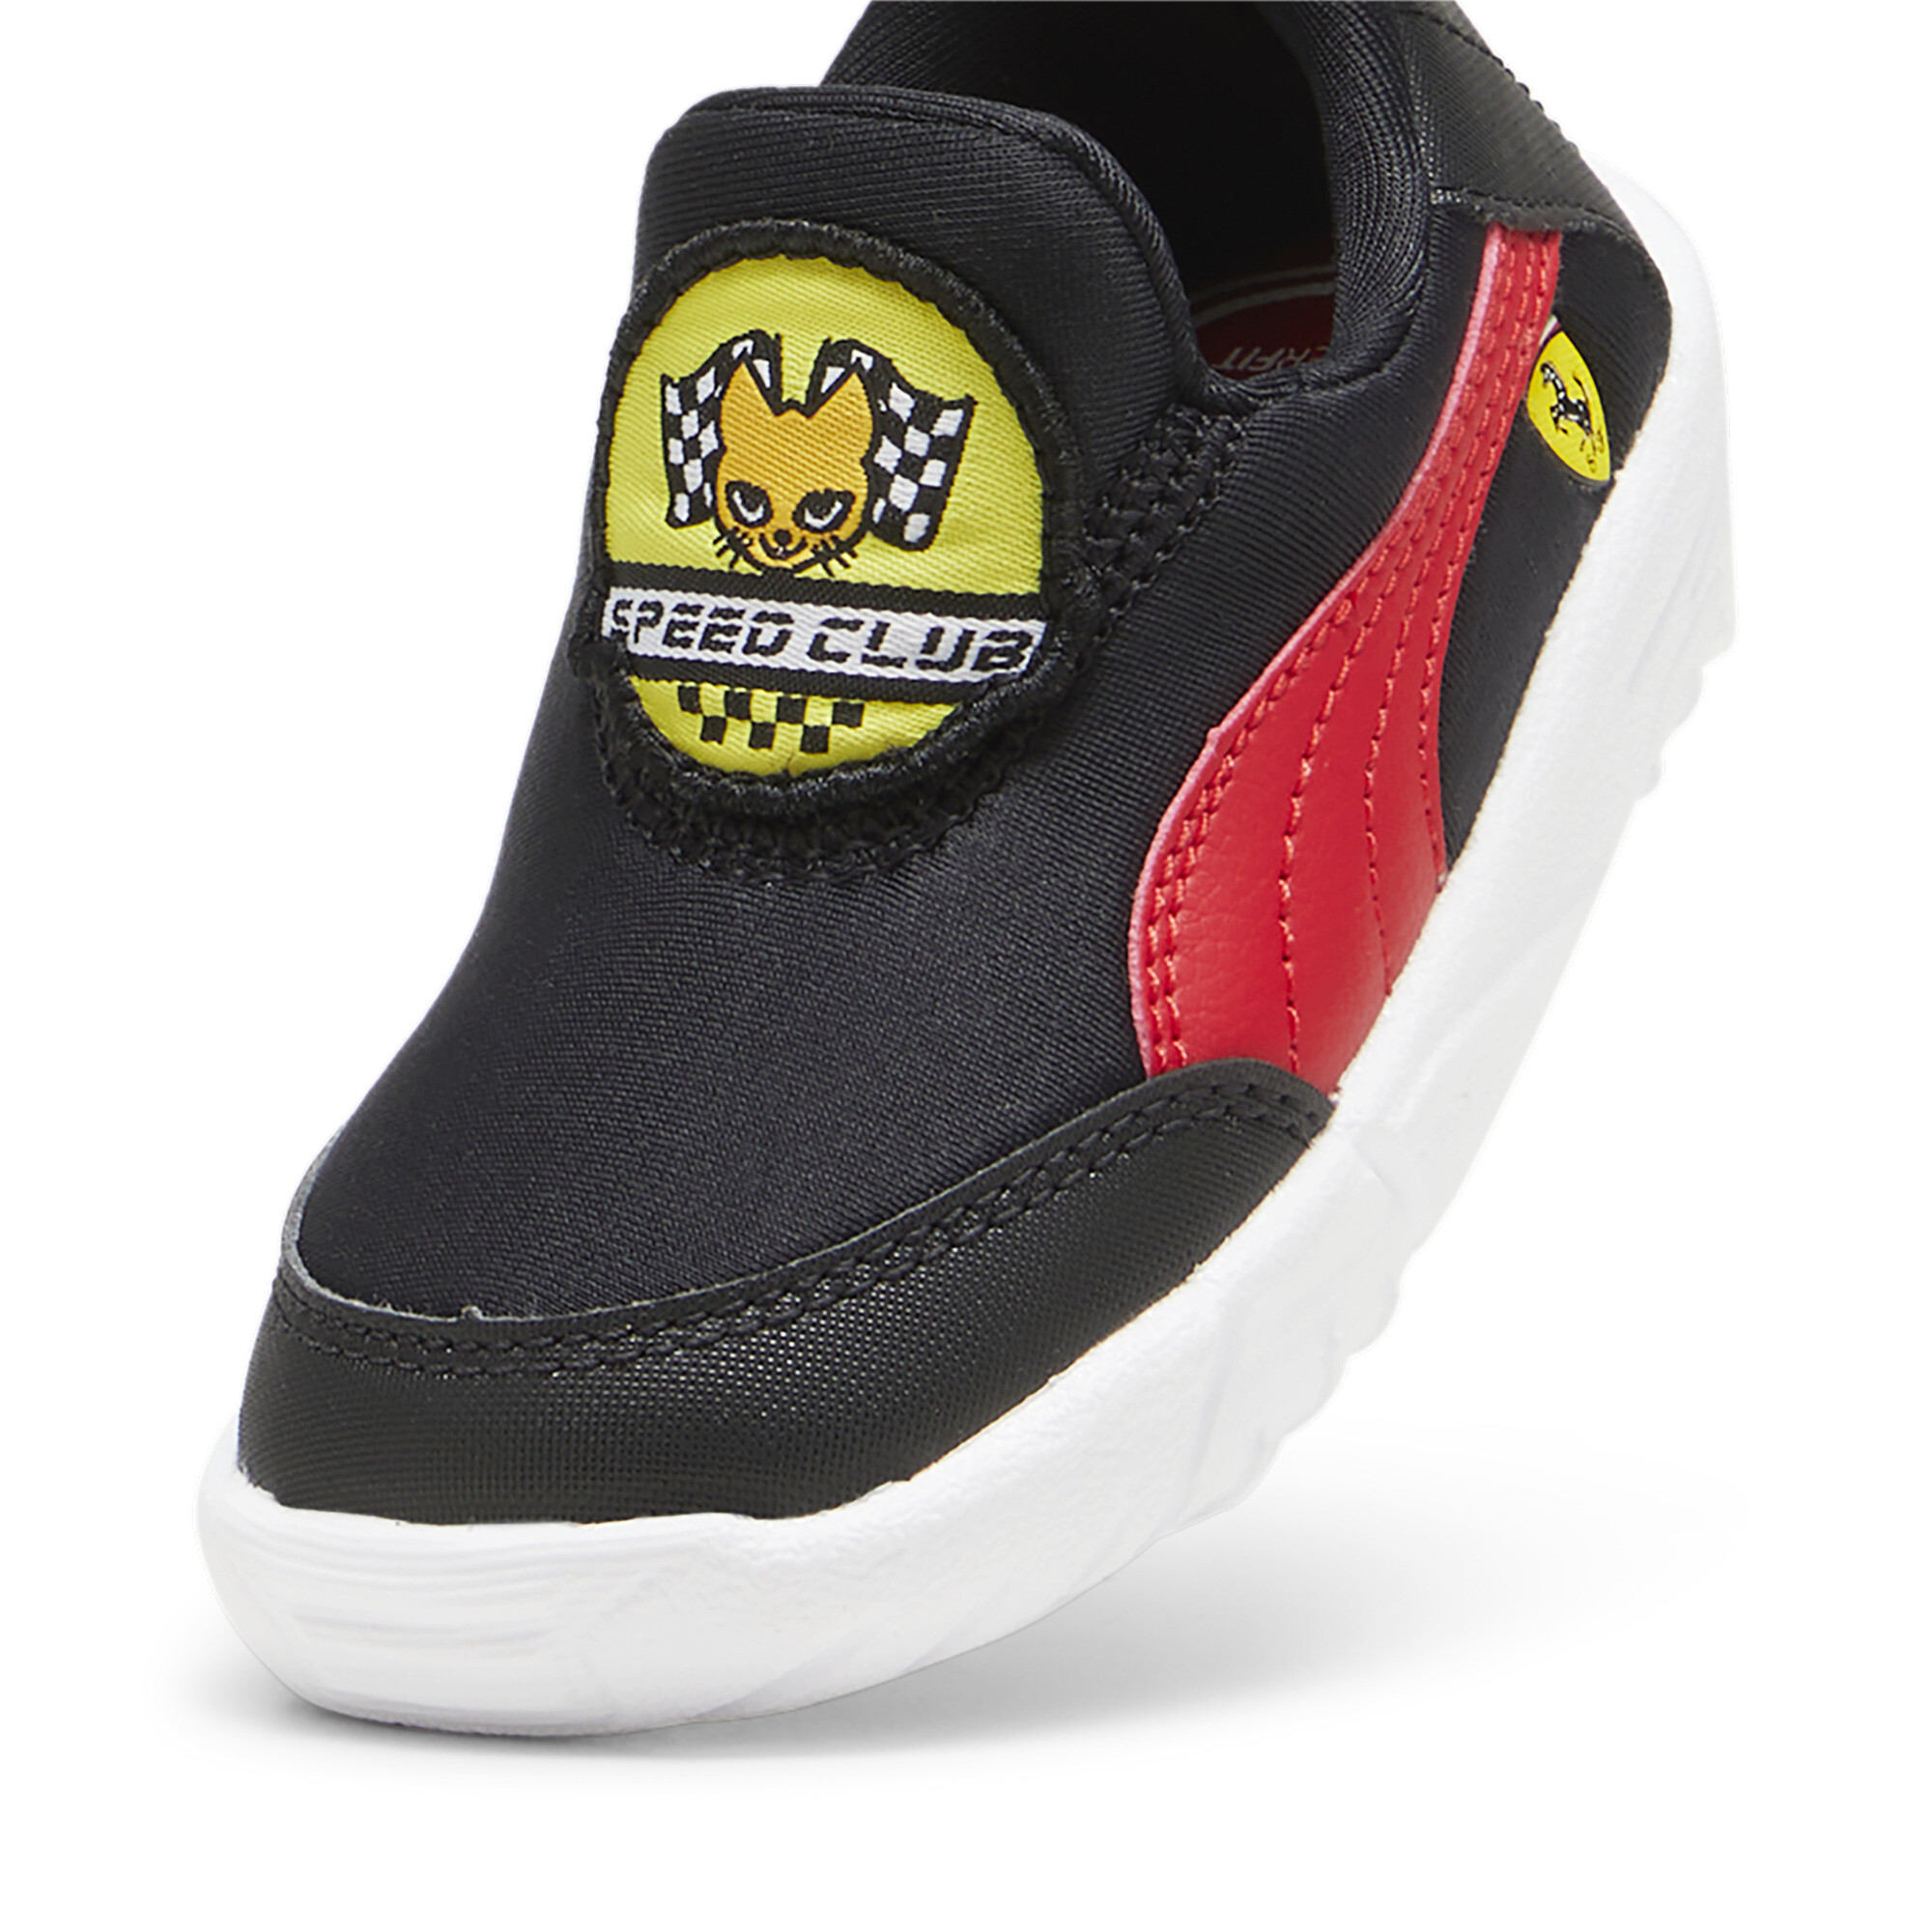 Puma Scuderia Ferrari Bao Kart Toddlers' Motorsport Shoes, Black, Size 21, Shoes